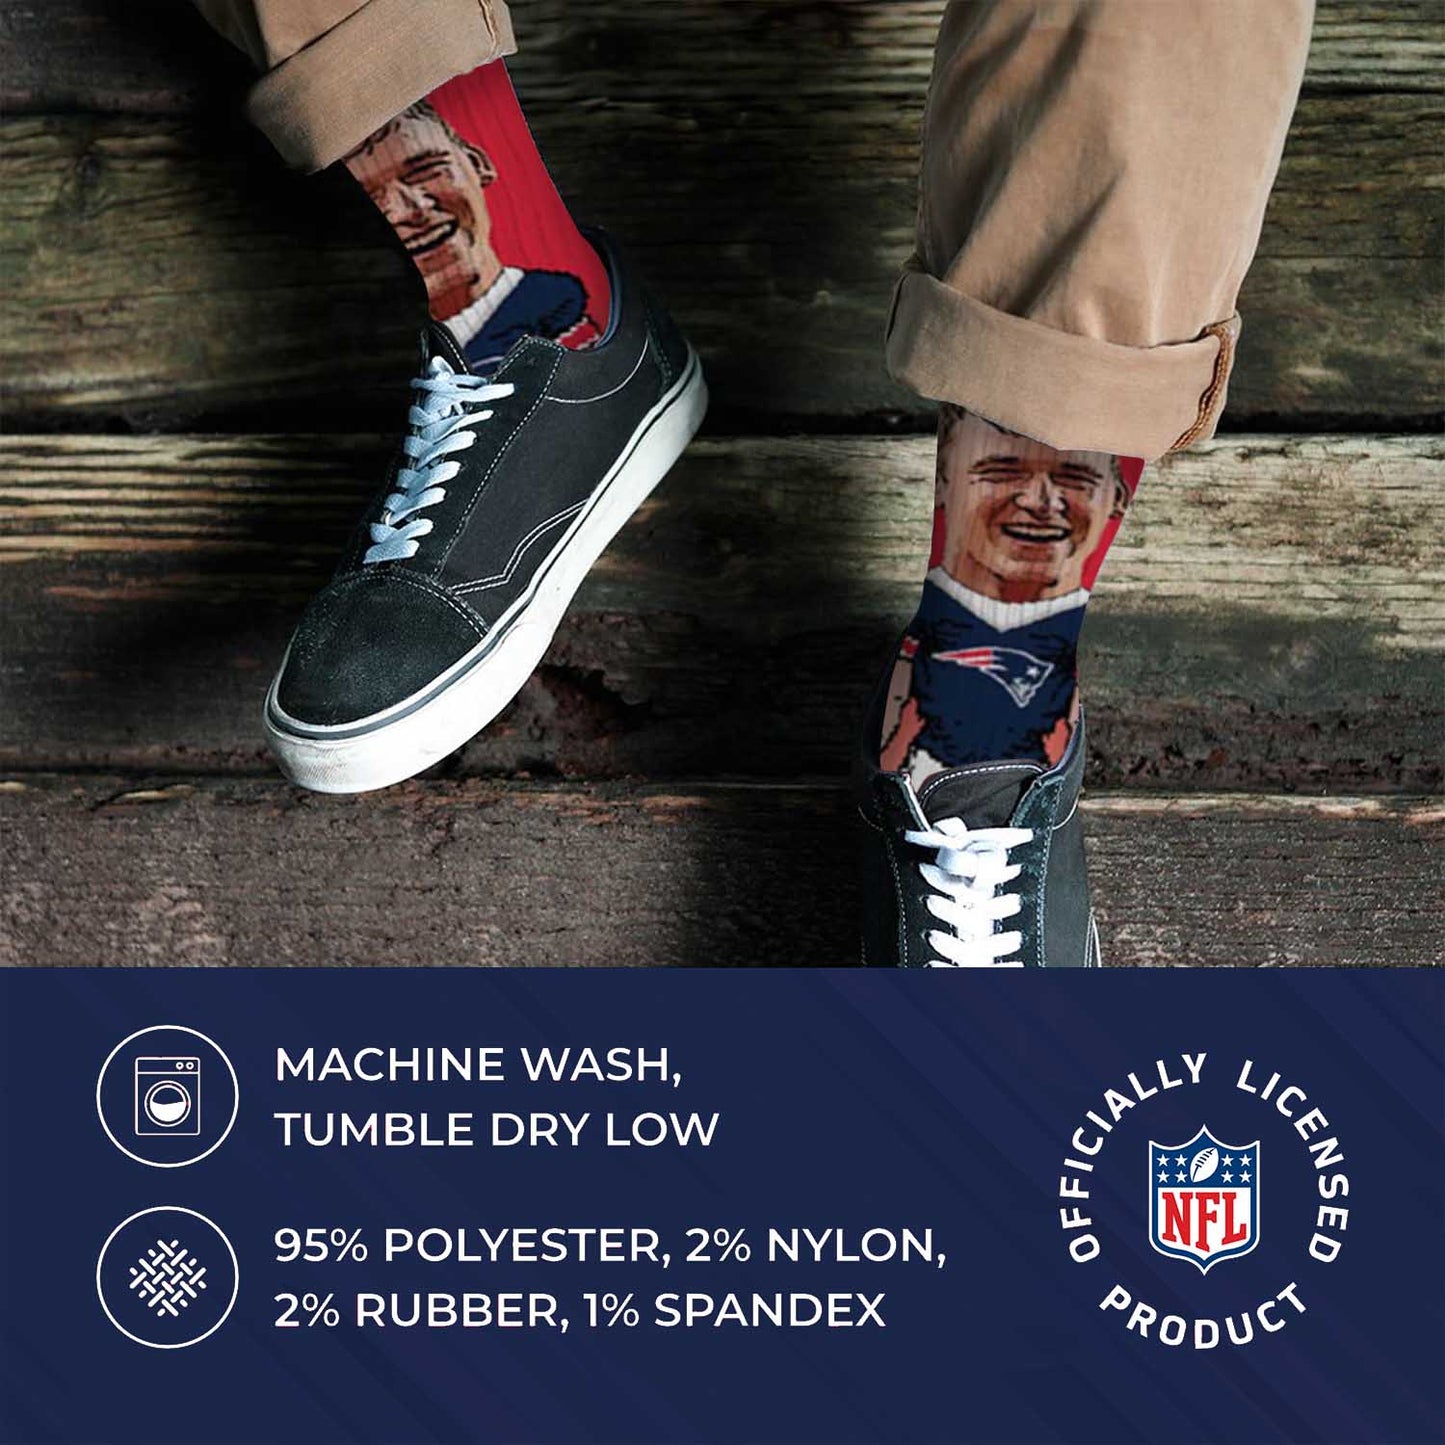 New England Patriots NFL Adult V Curve MVP Player Crew Socks - Red